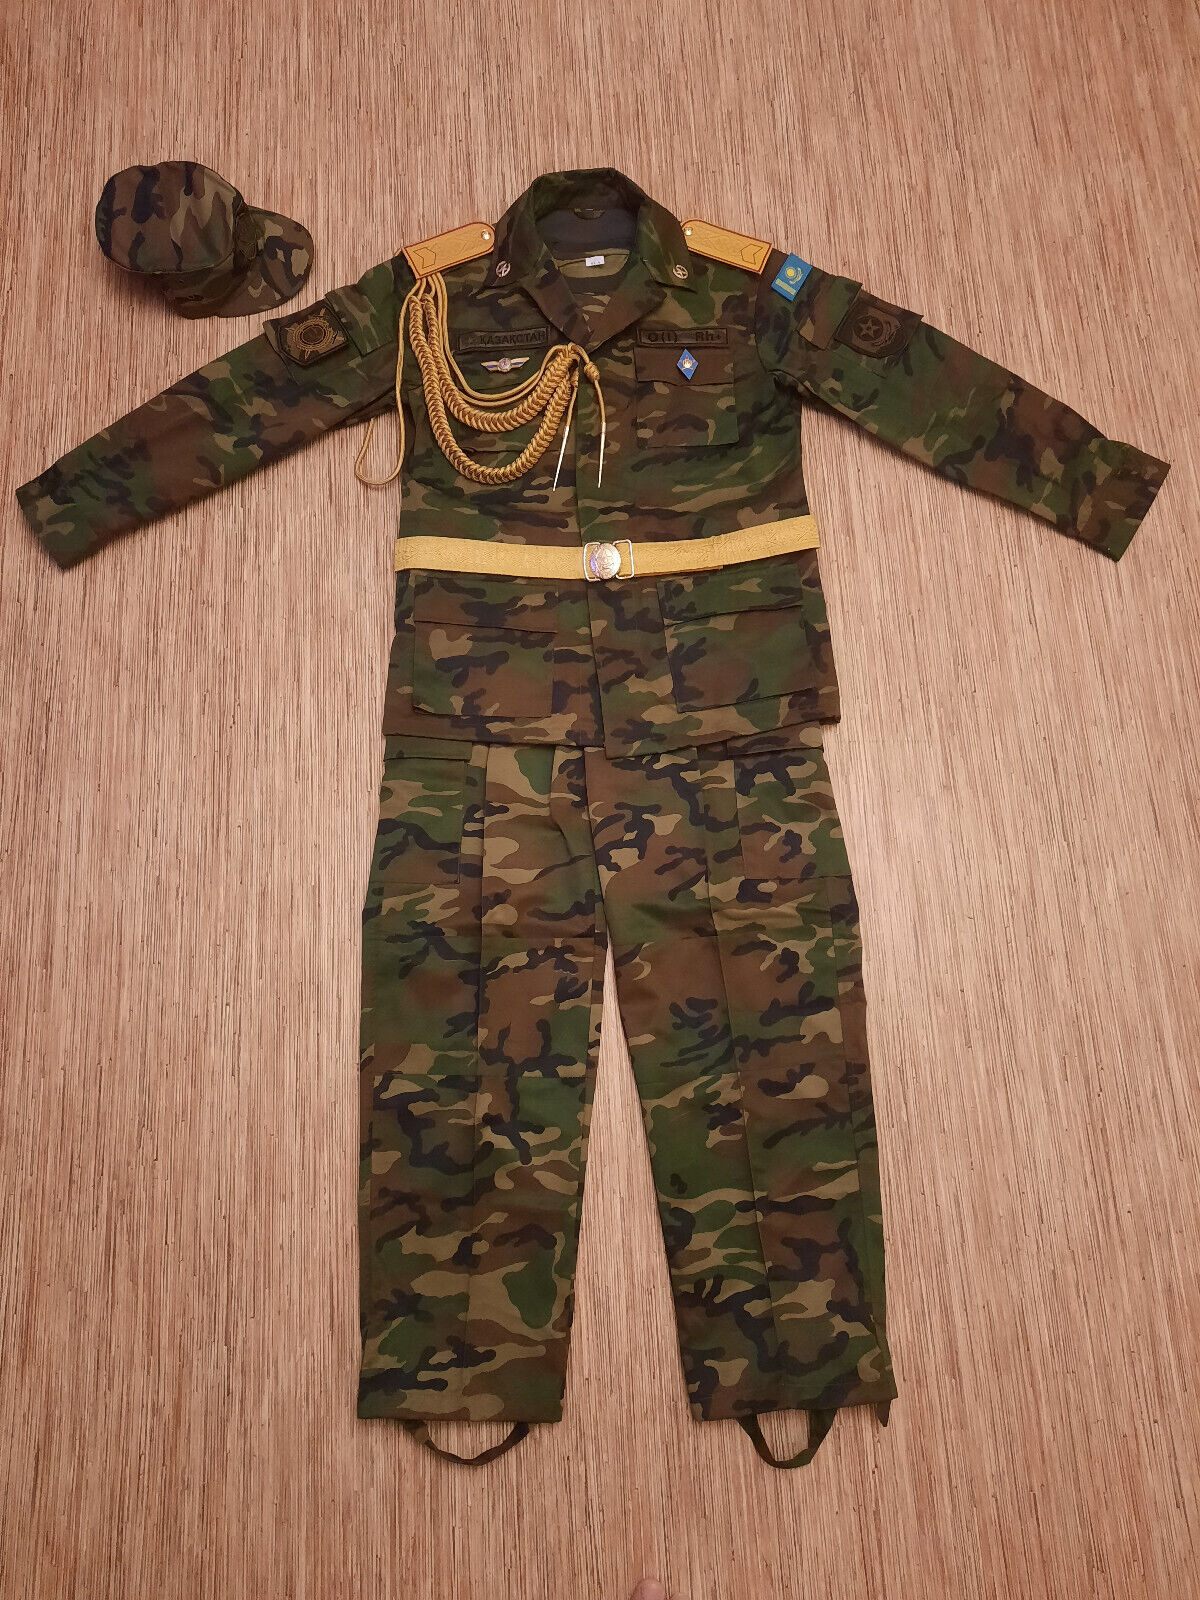 Super RARE Woodland Camo Military Demobilization Soldier Uniform Kazakhstan Army